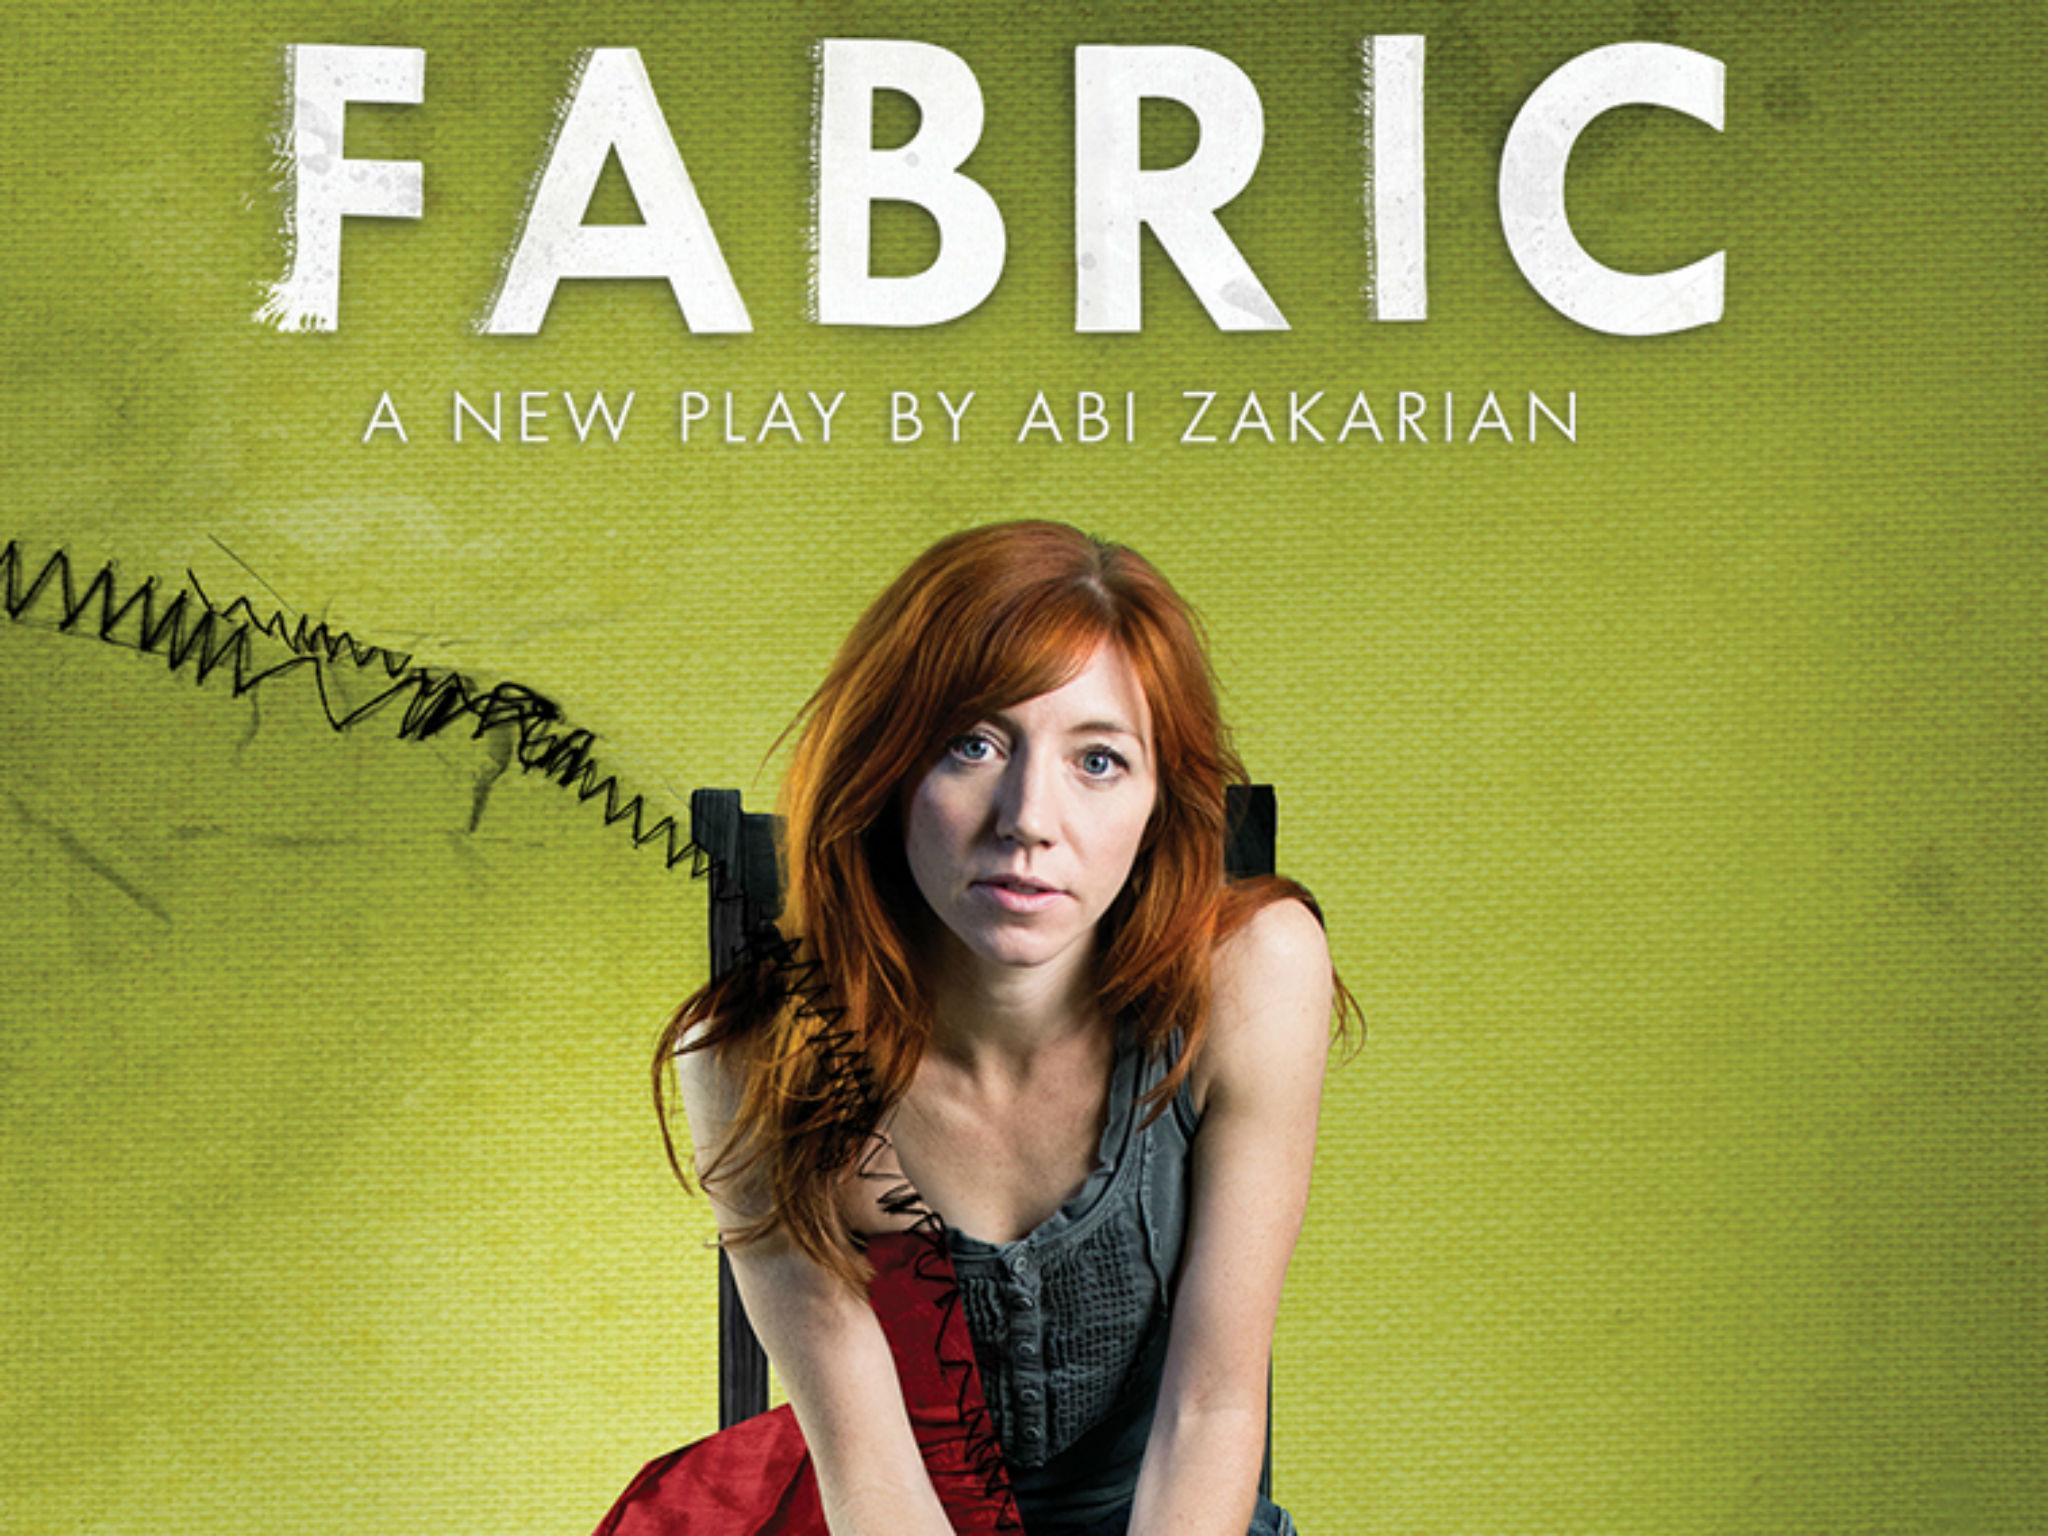 Abi Zakarian's Fabric, starring Nancy Sullivan, takes an unflinching look at rape